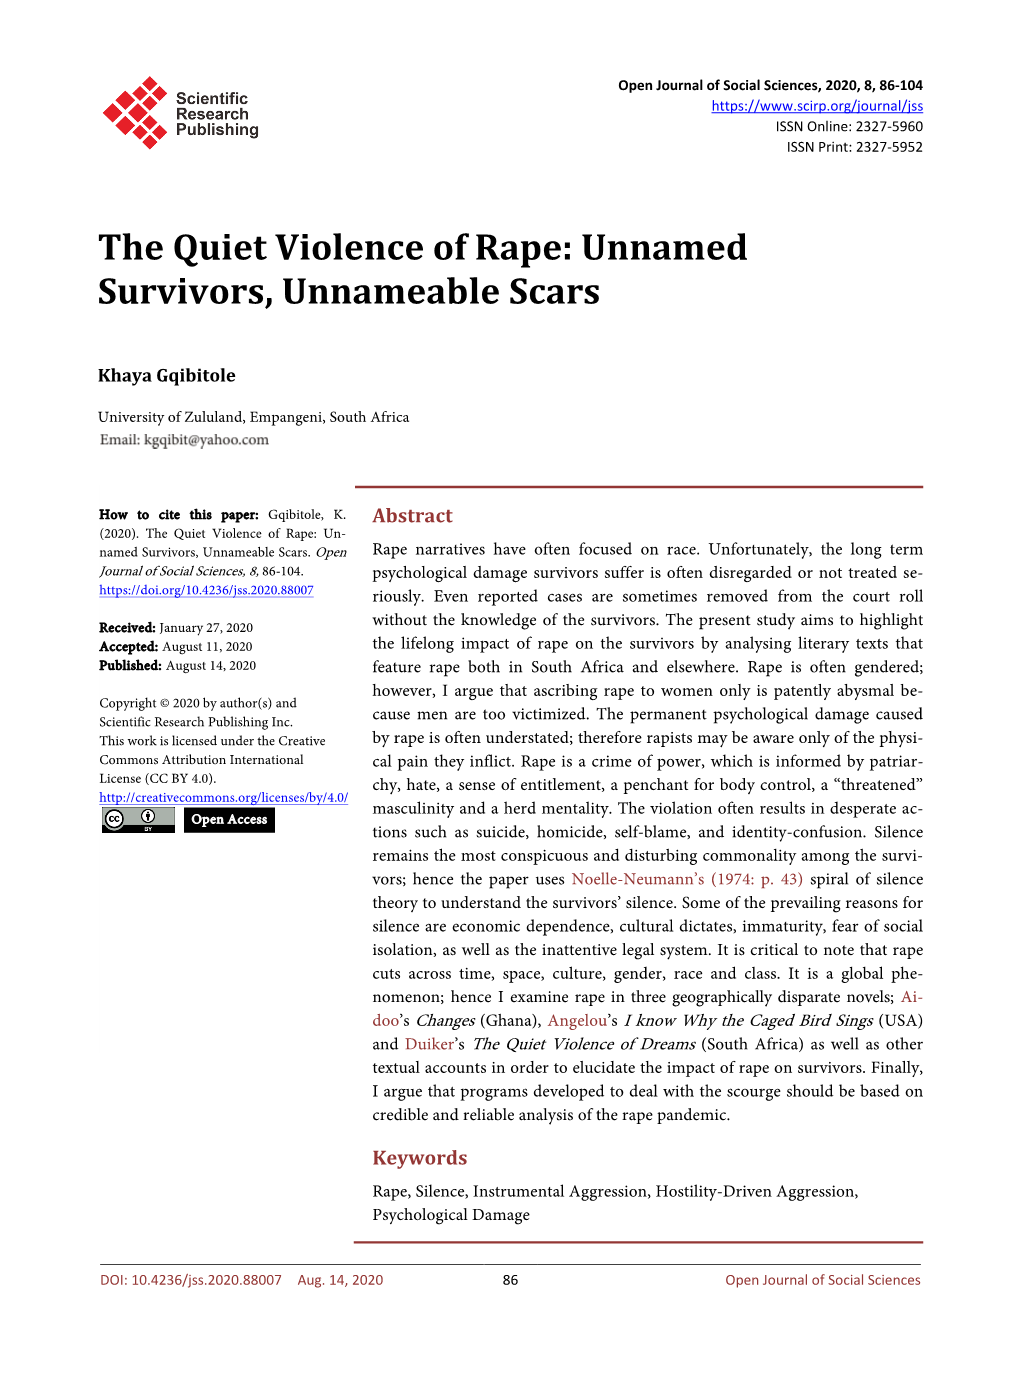 The Quiet Violence of Rape: Unnamed Survivors, Unnameable Scars